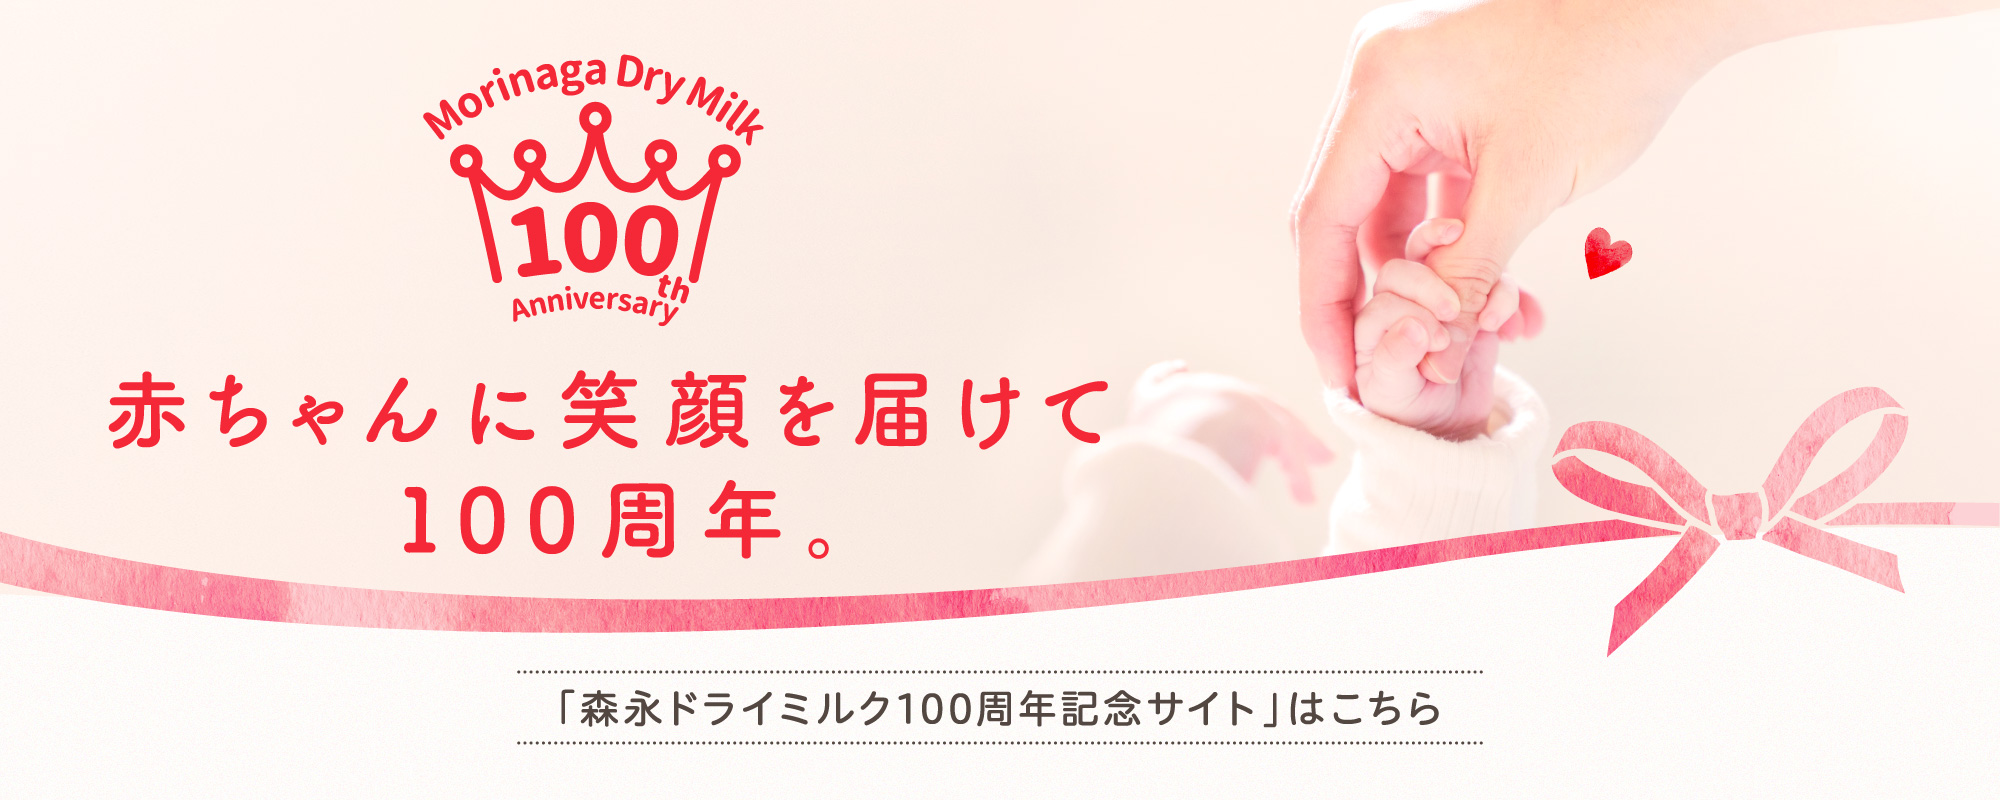 Morinaga Dry Milk 100th Anniversary 赤ちゃんに笑顔を届けて100周年。